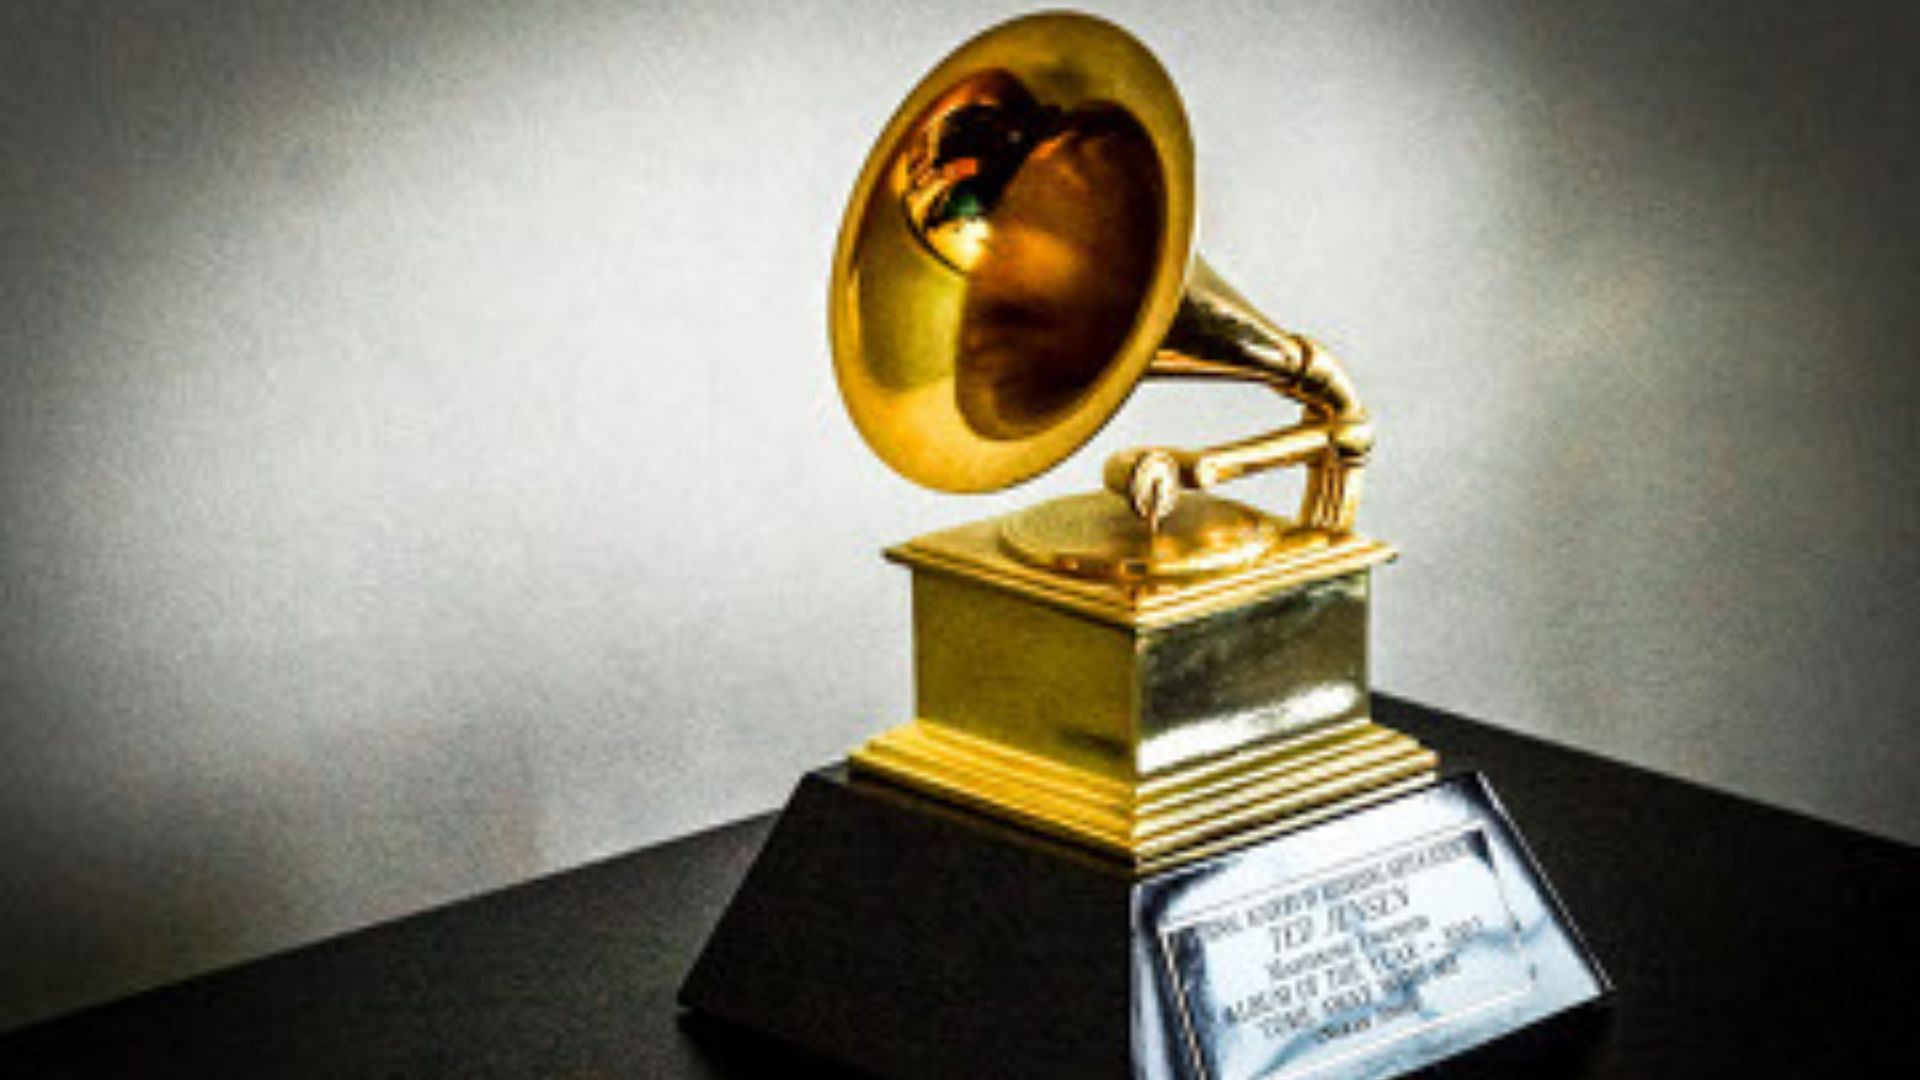 A still of the Grammy Award Statue (Image Via Wikipedia)